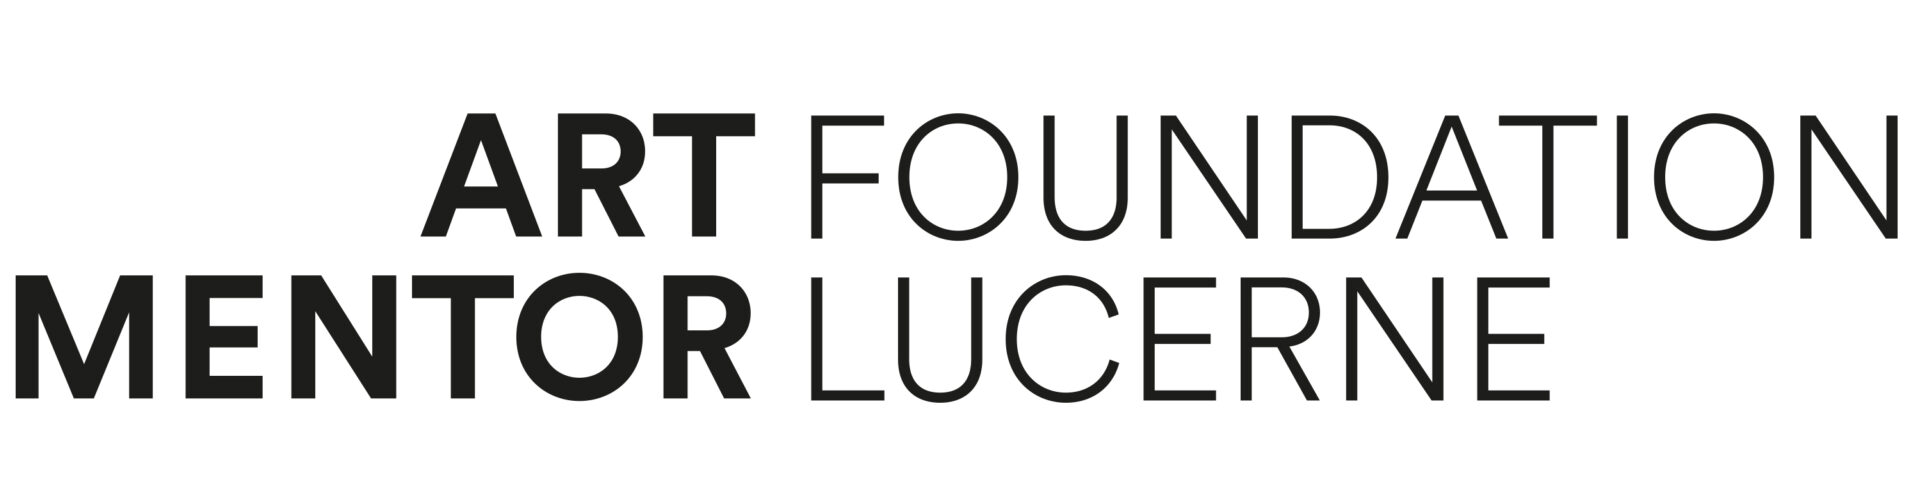 Logo Art Mentor Foundation Lucerne 3000x770px